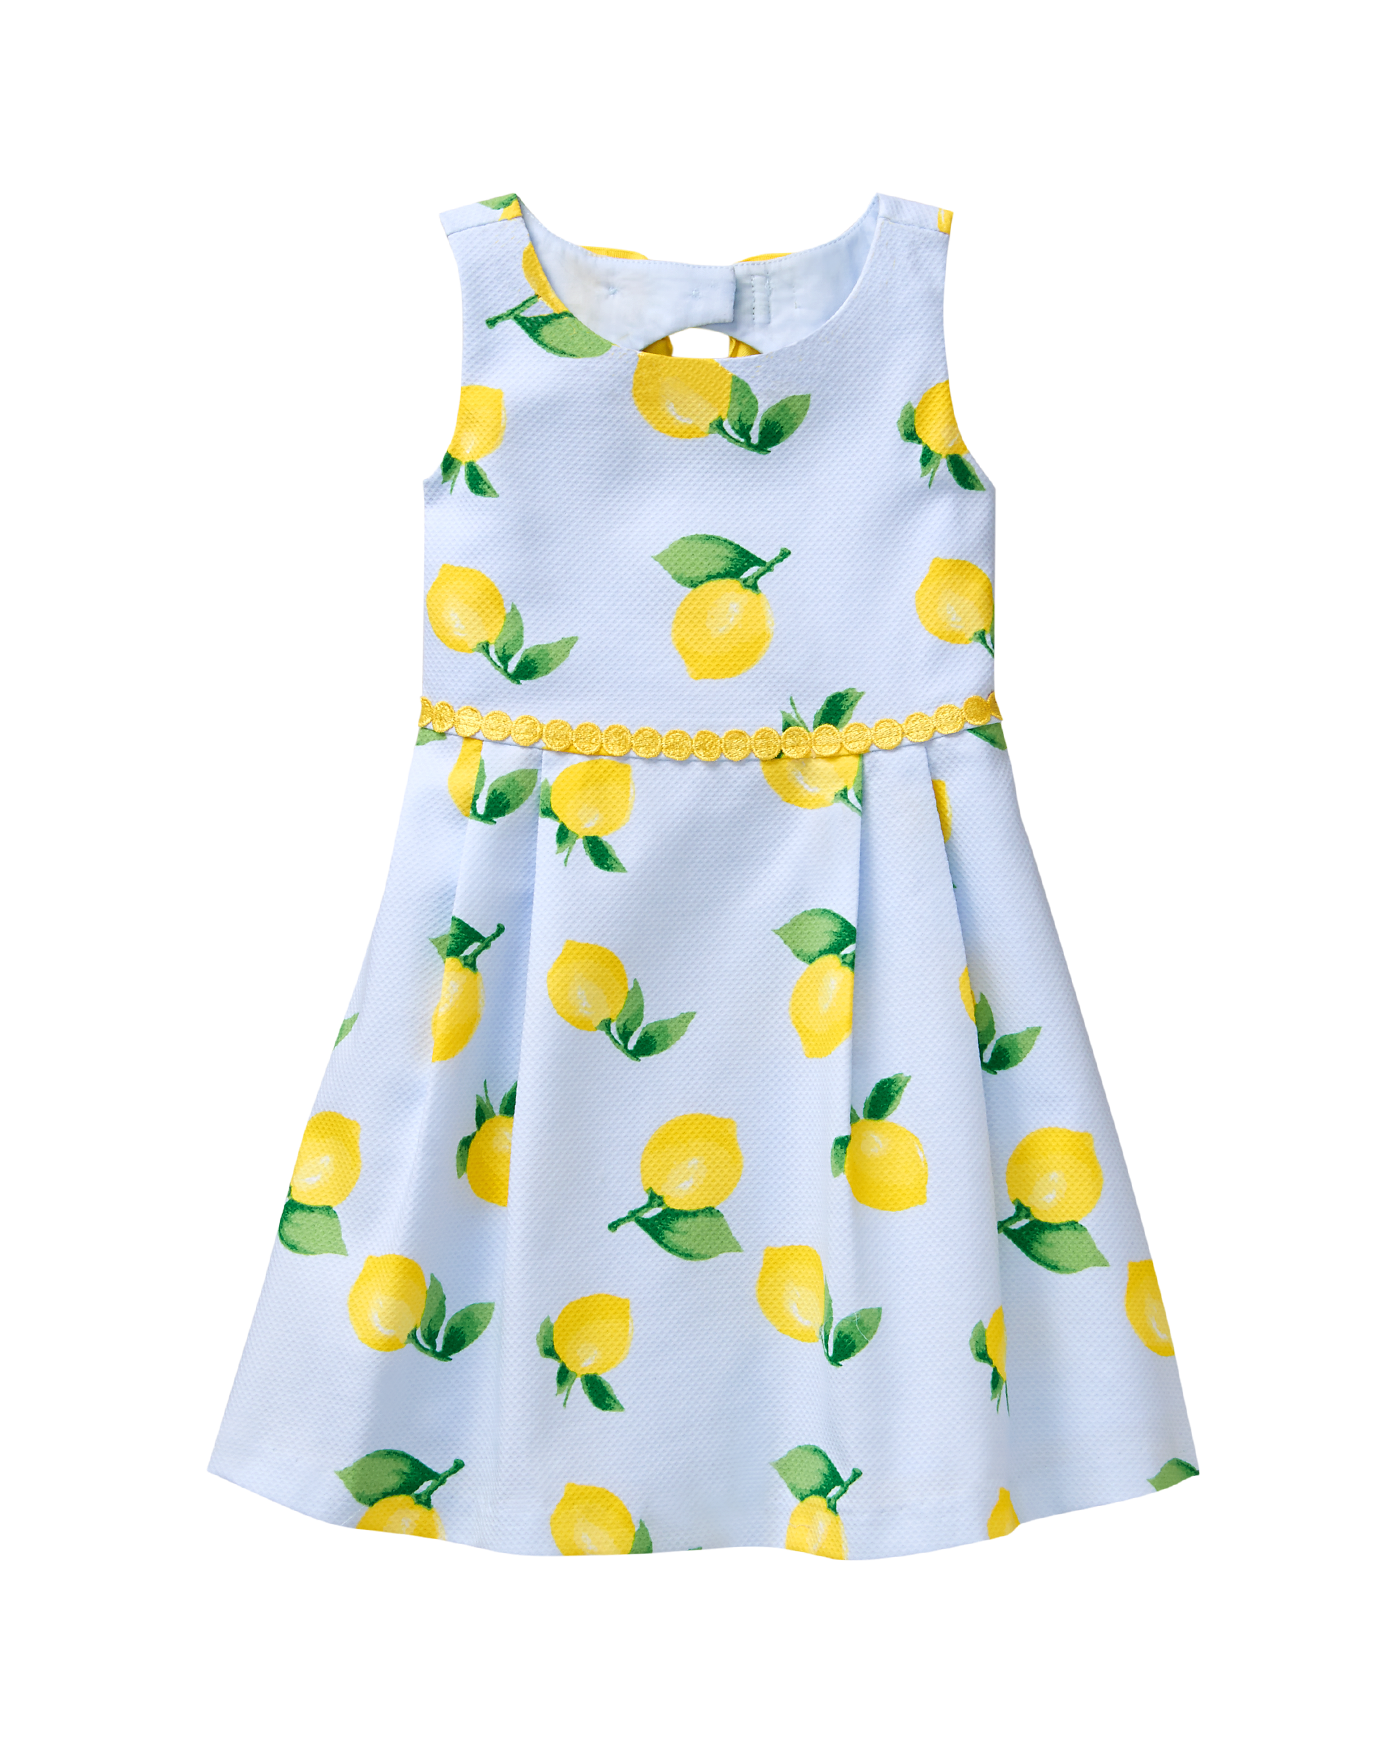 newborn lemon outfit